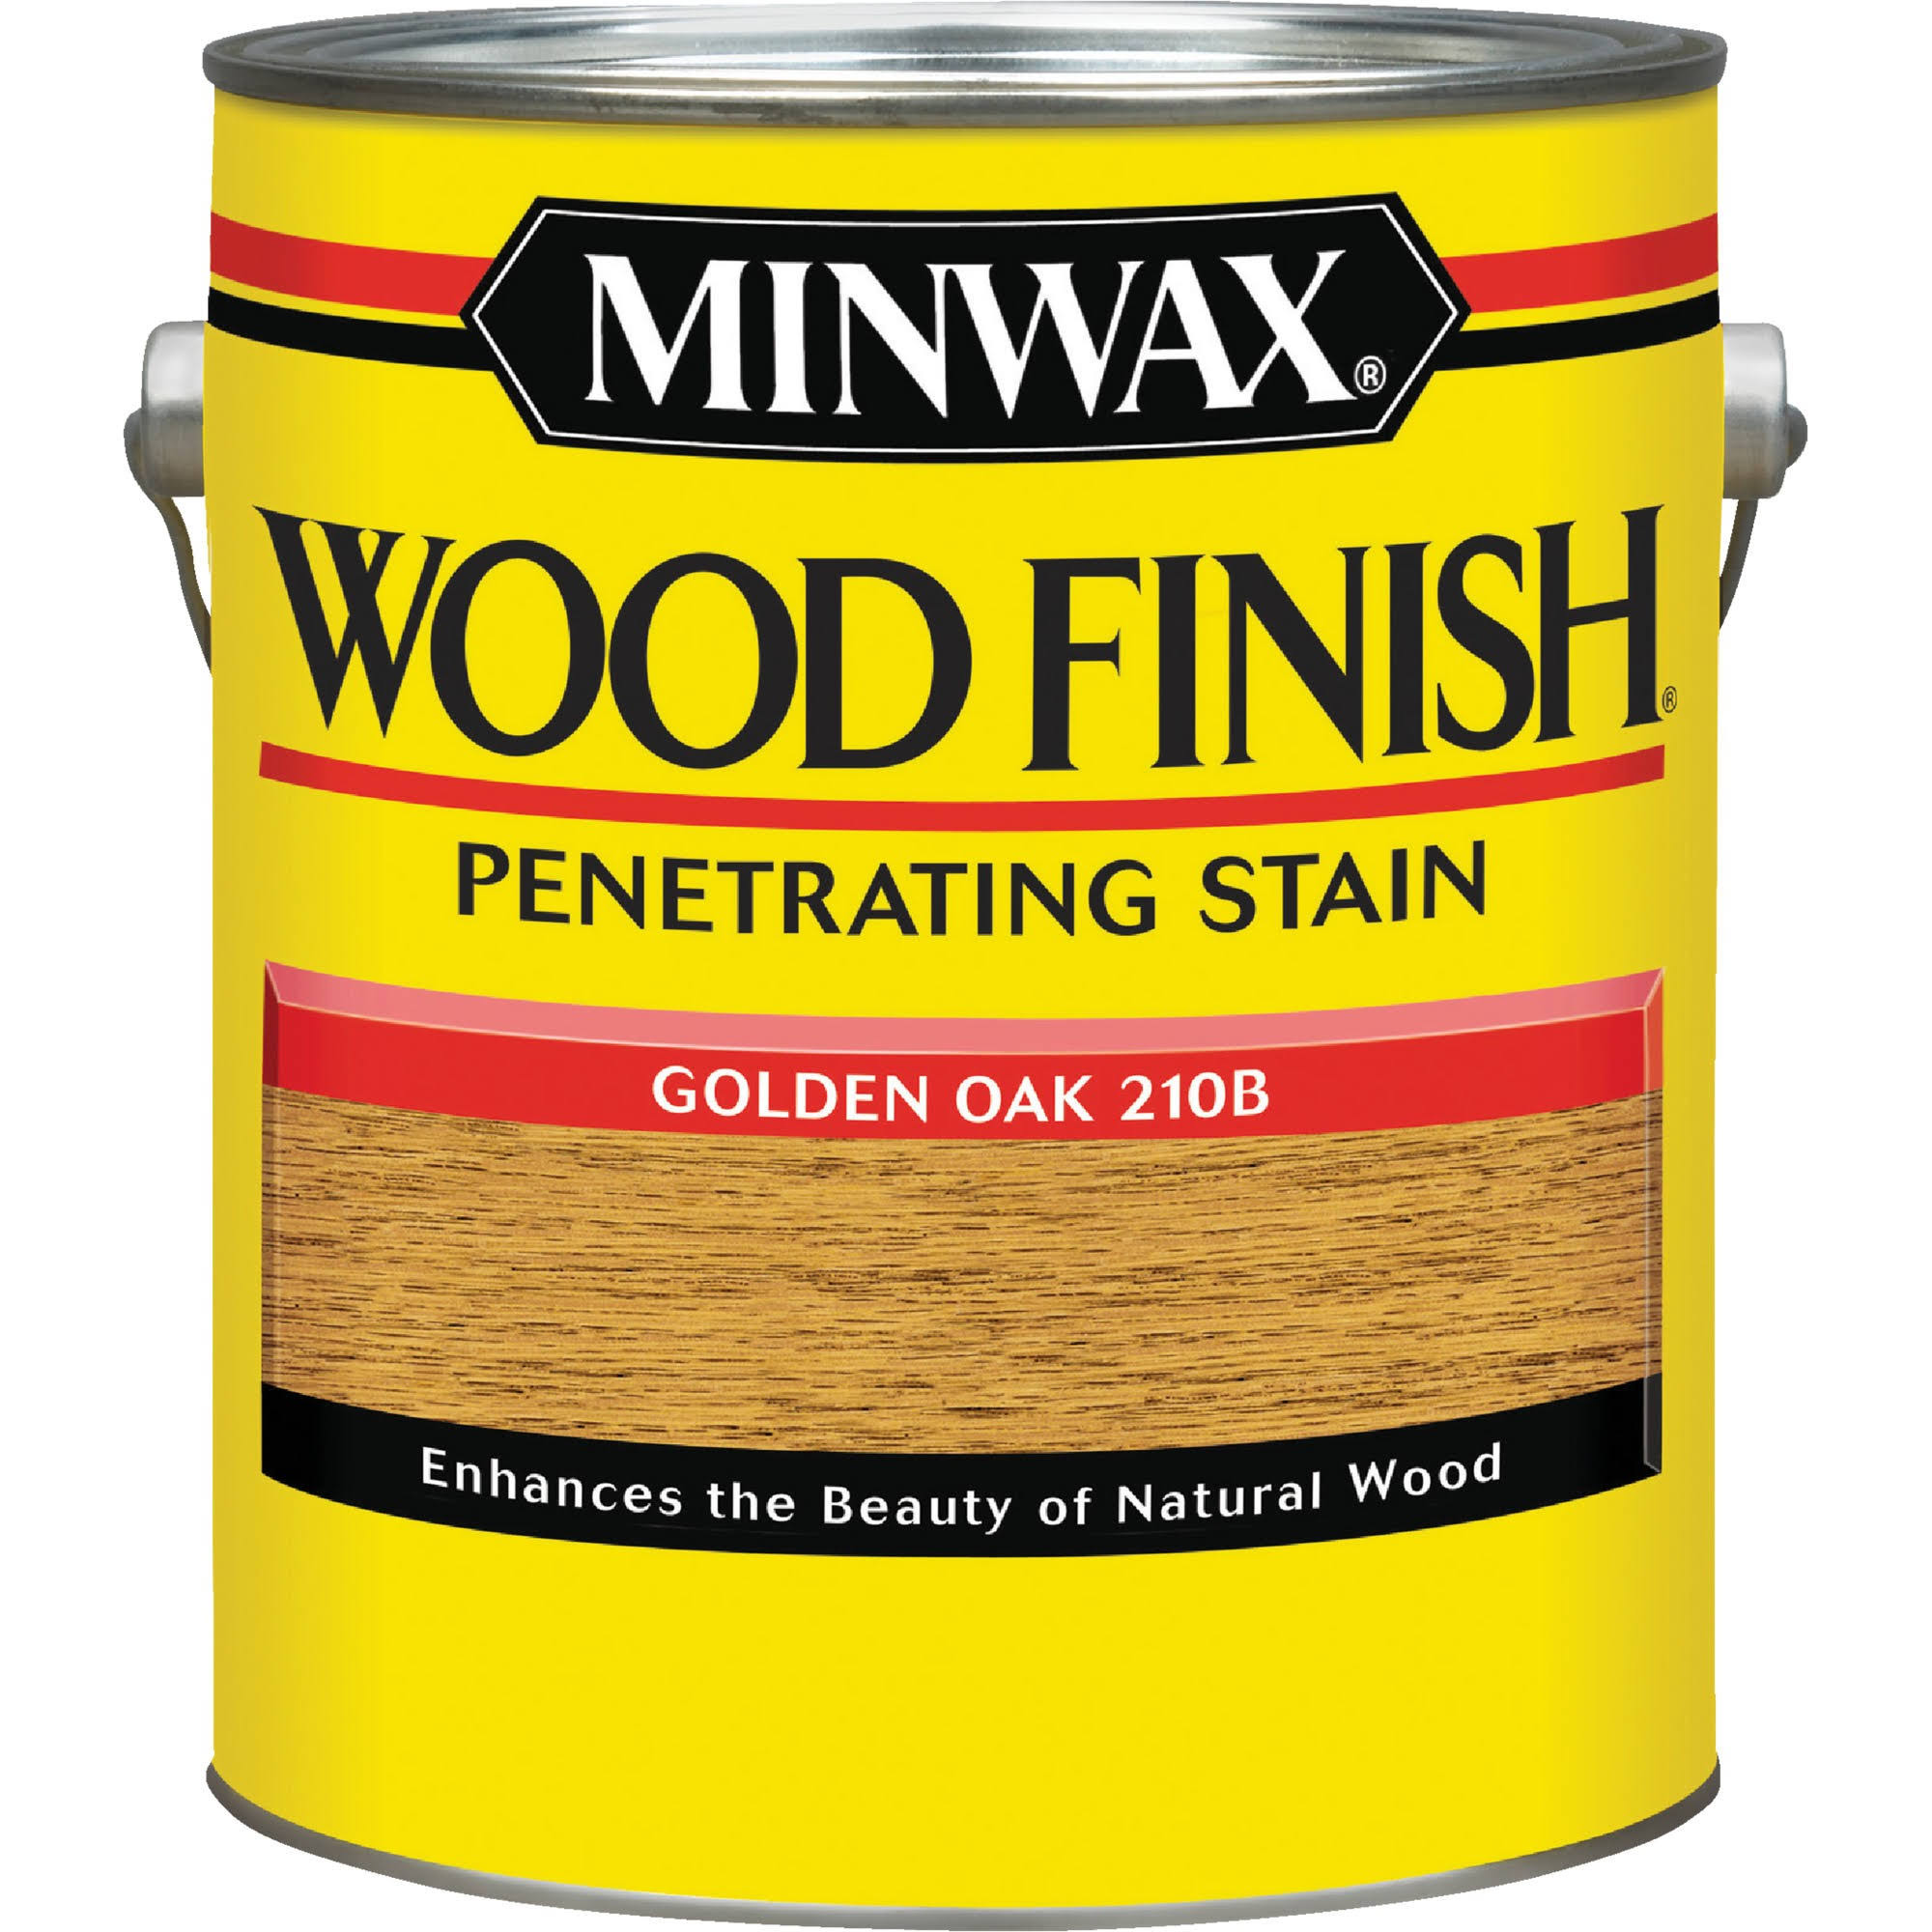 Minwax Penetrating Stain Wood Finish - 210B Golden Oak, 1gal